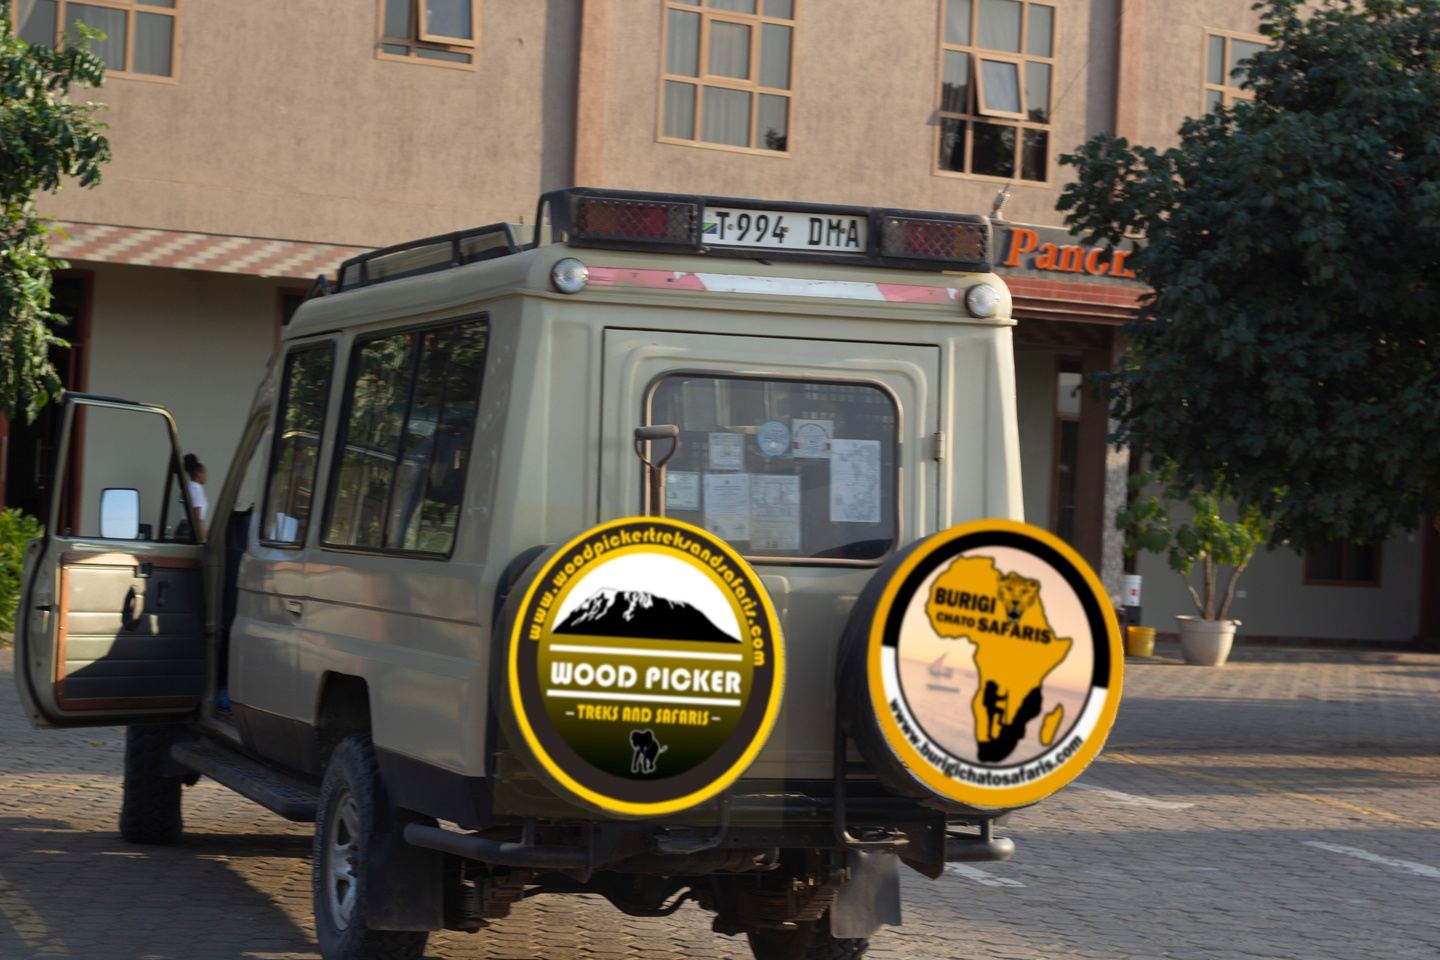 Tanzania Six Days Safari Itinerary for Arusha N.P, Manyara, Tarangire